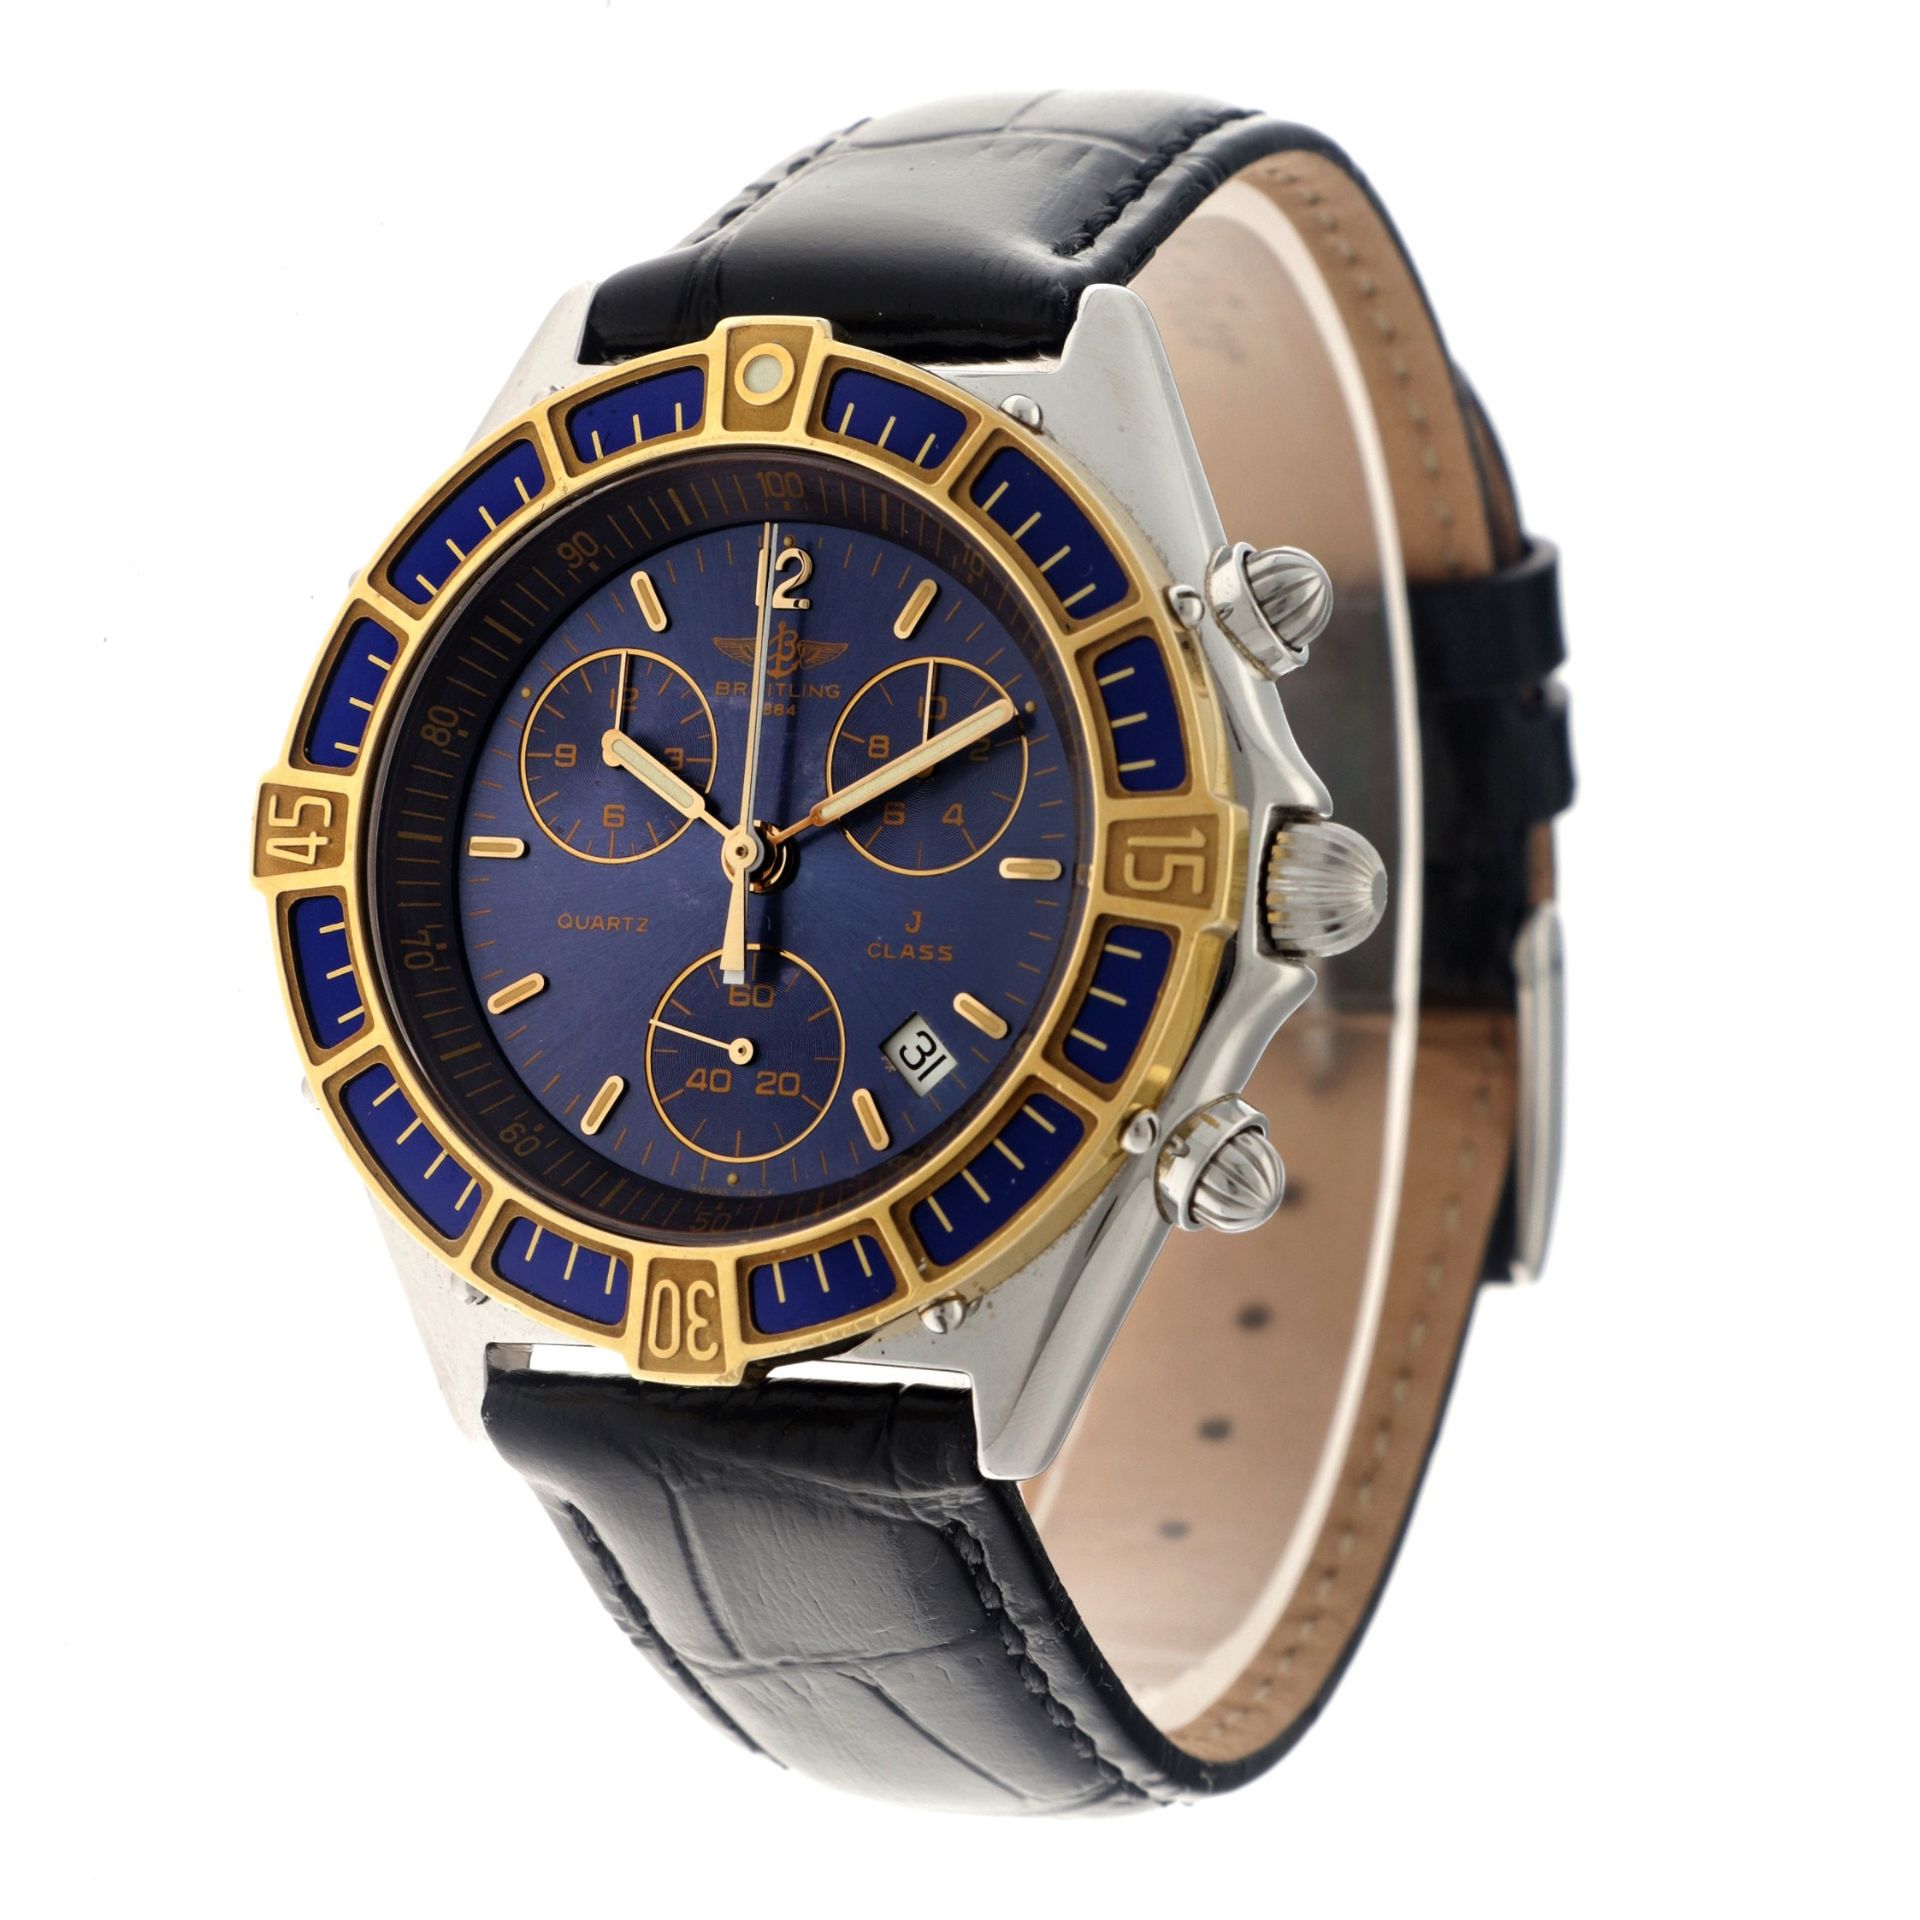 No Reserve - Breitling J-Class D53067 - Men's watch.  - Image 2 of 5